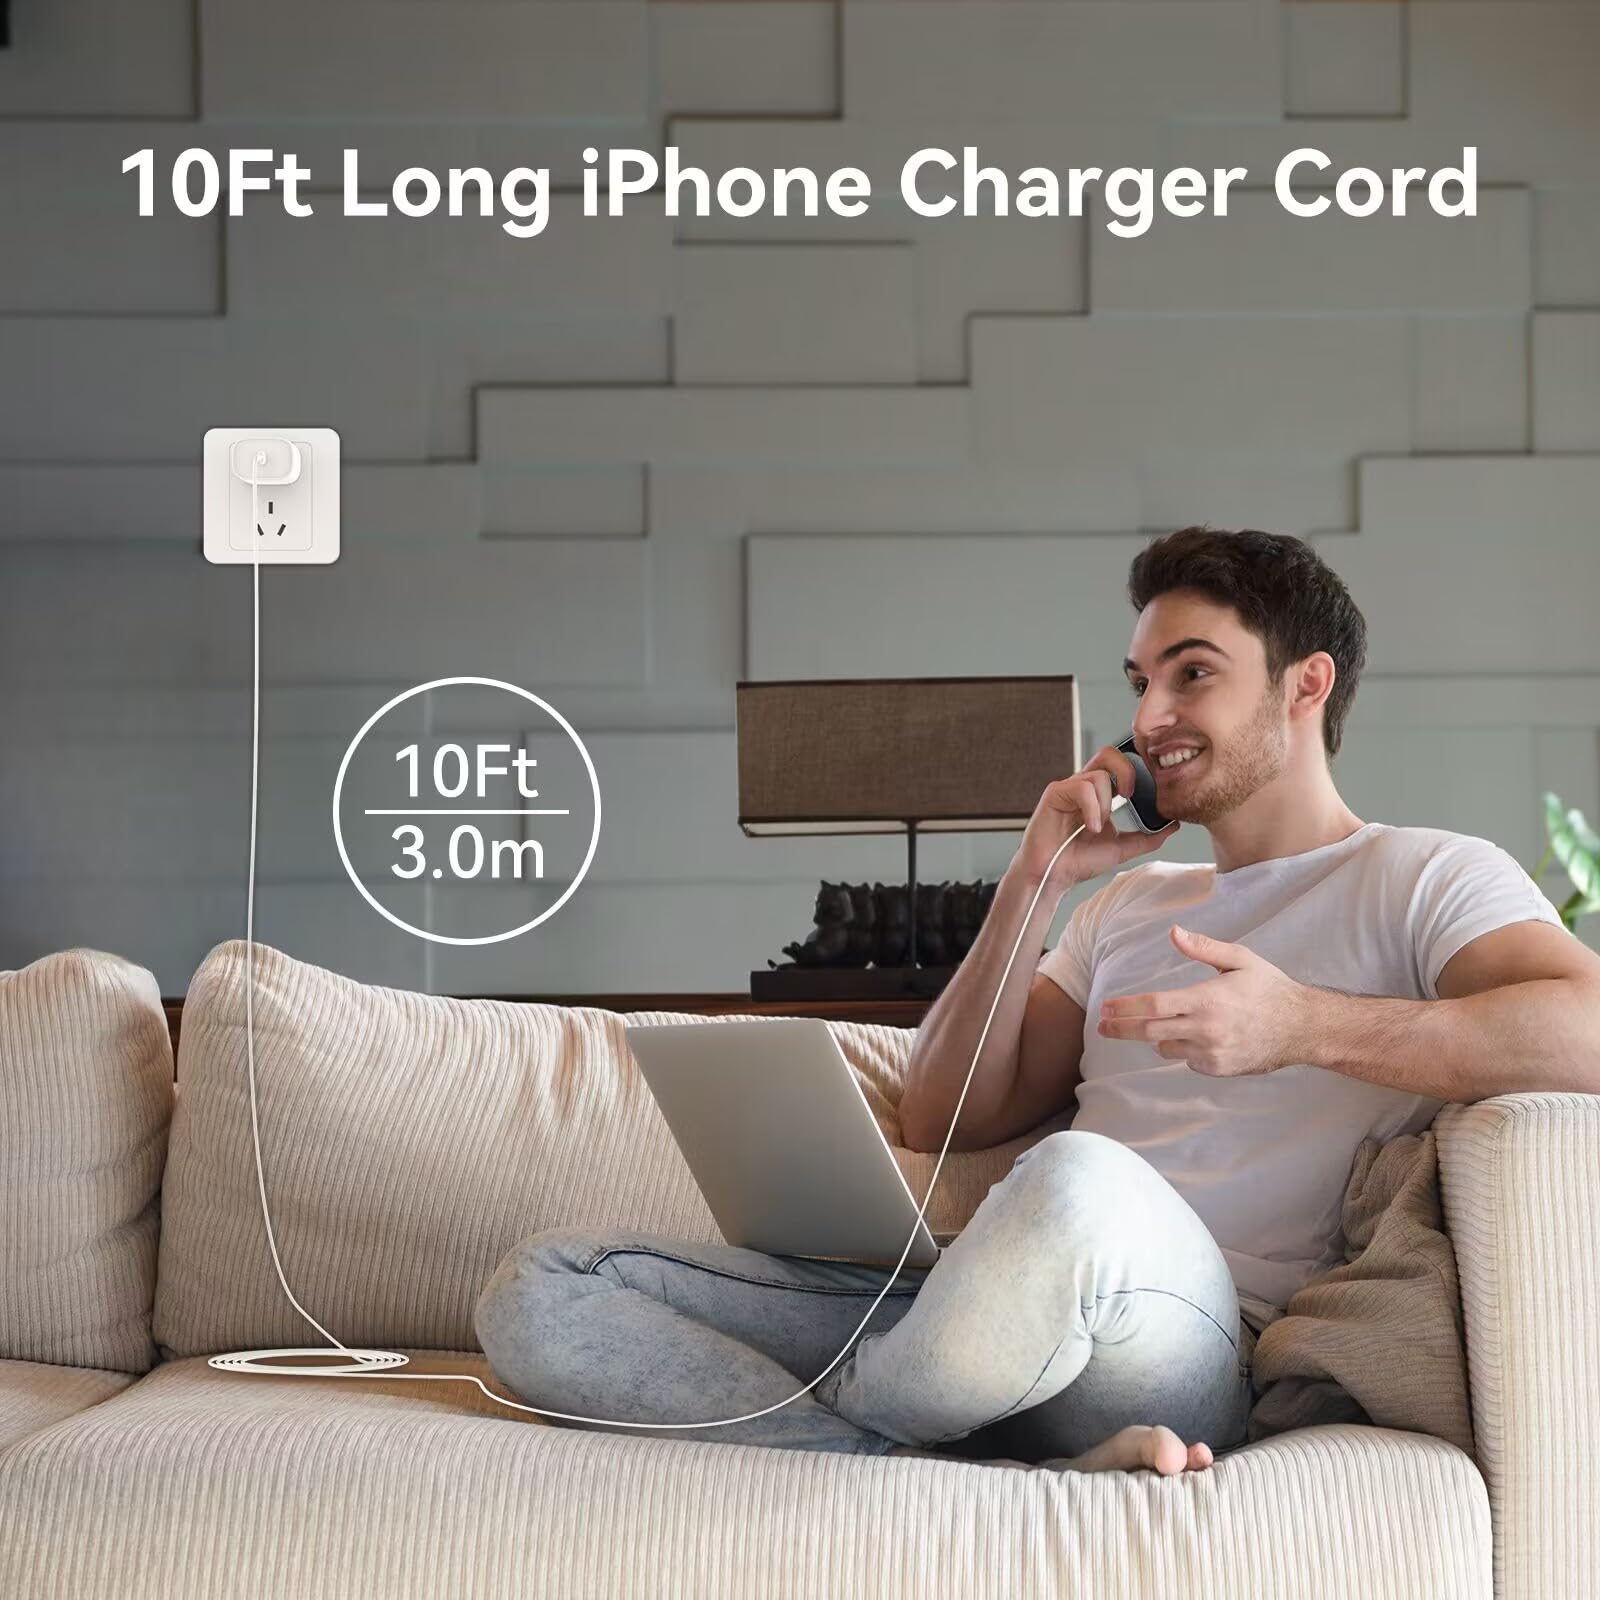 iPhone 15/15 Pro Max Charger Fast Charging,20W USB C Fast Charger Block iPhone 15 Charger Cord 10FT Long USB C to C Charging Cable for iPhone 15 Pro Max/15 Pro/15/15 Plus,iPad Pro 12.9"/11",iPad Air